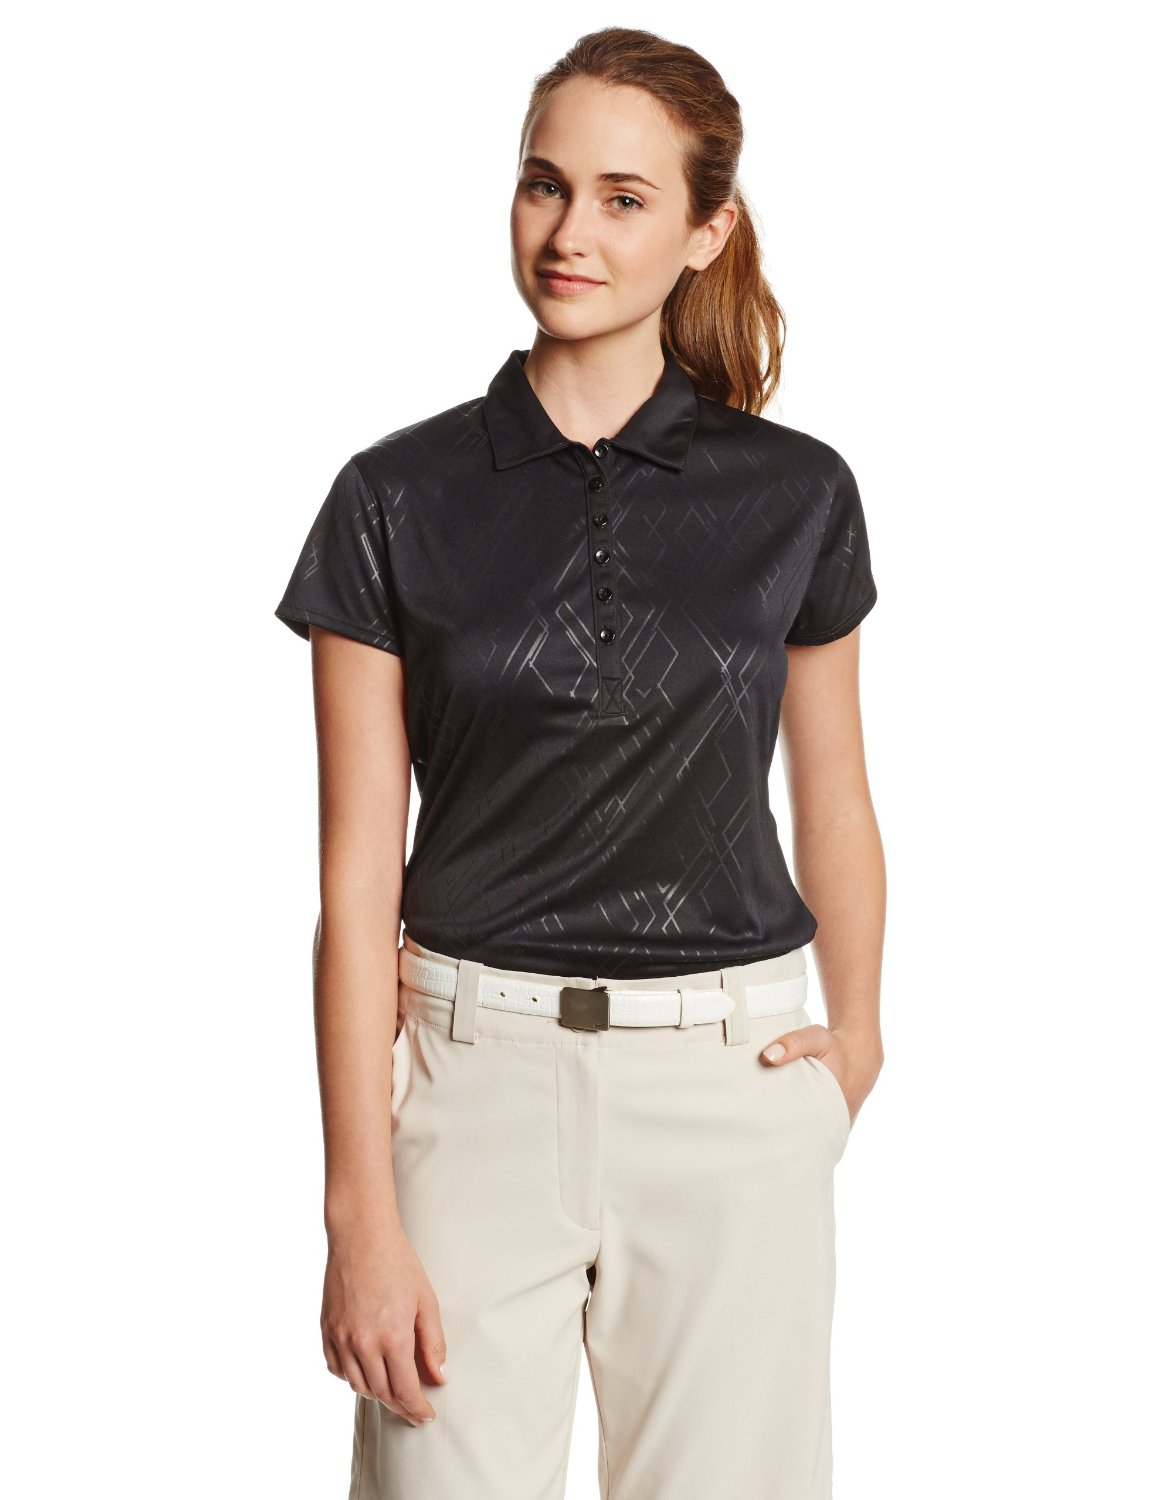 Womens Performance Cap Sleeve Embossed Argyle Golf Polo Shirts